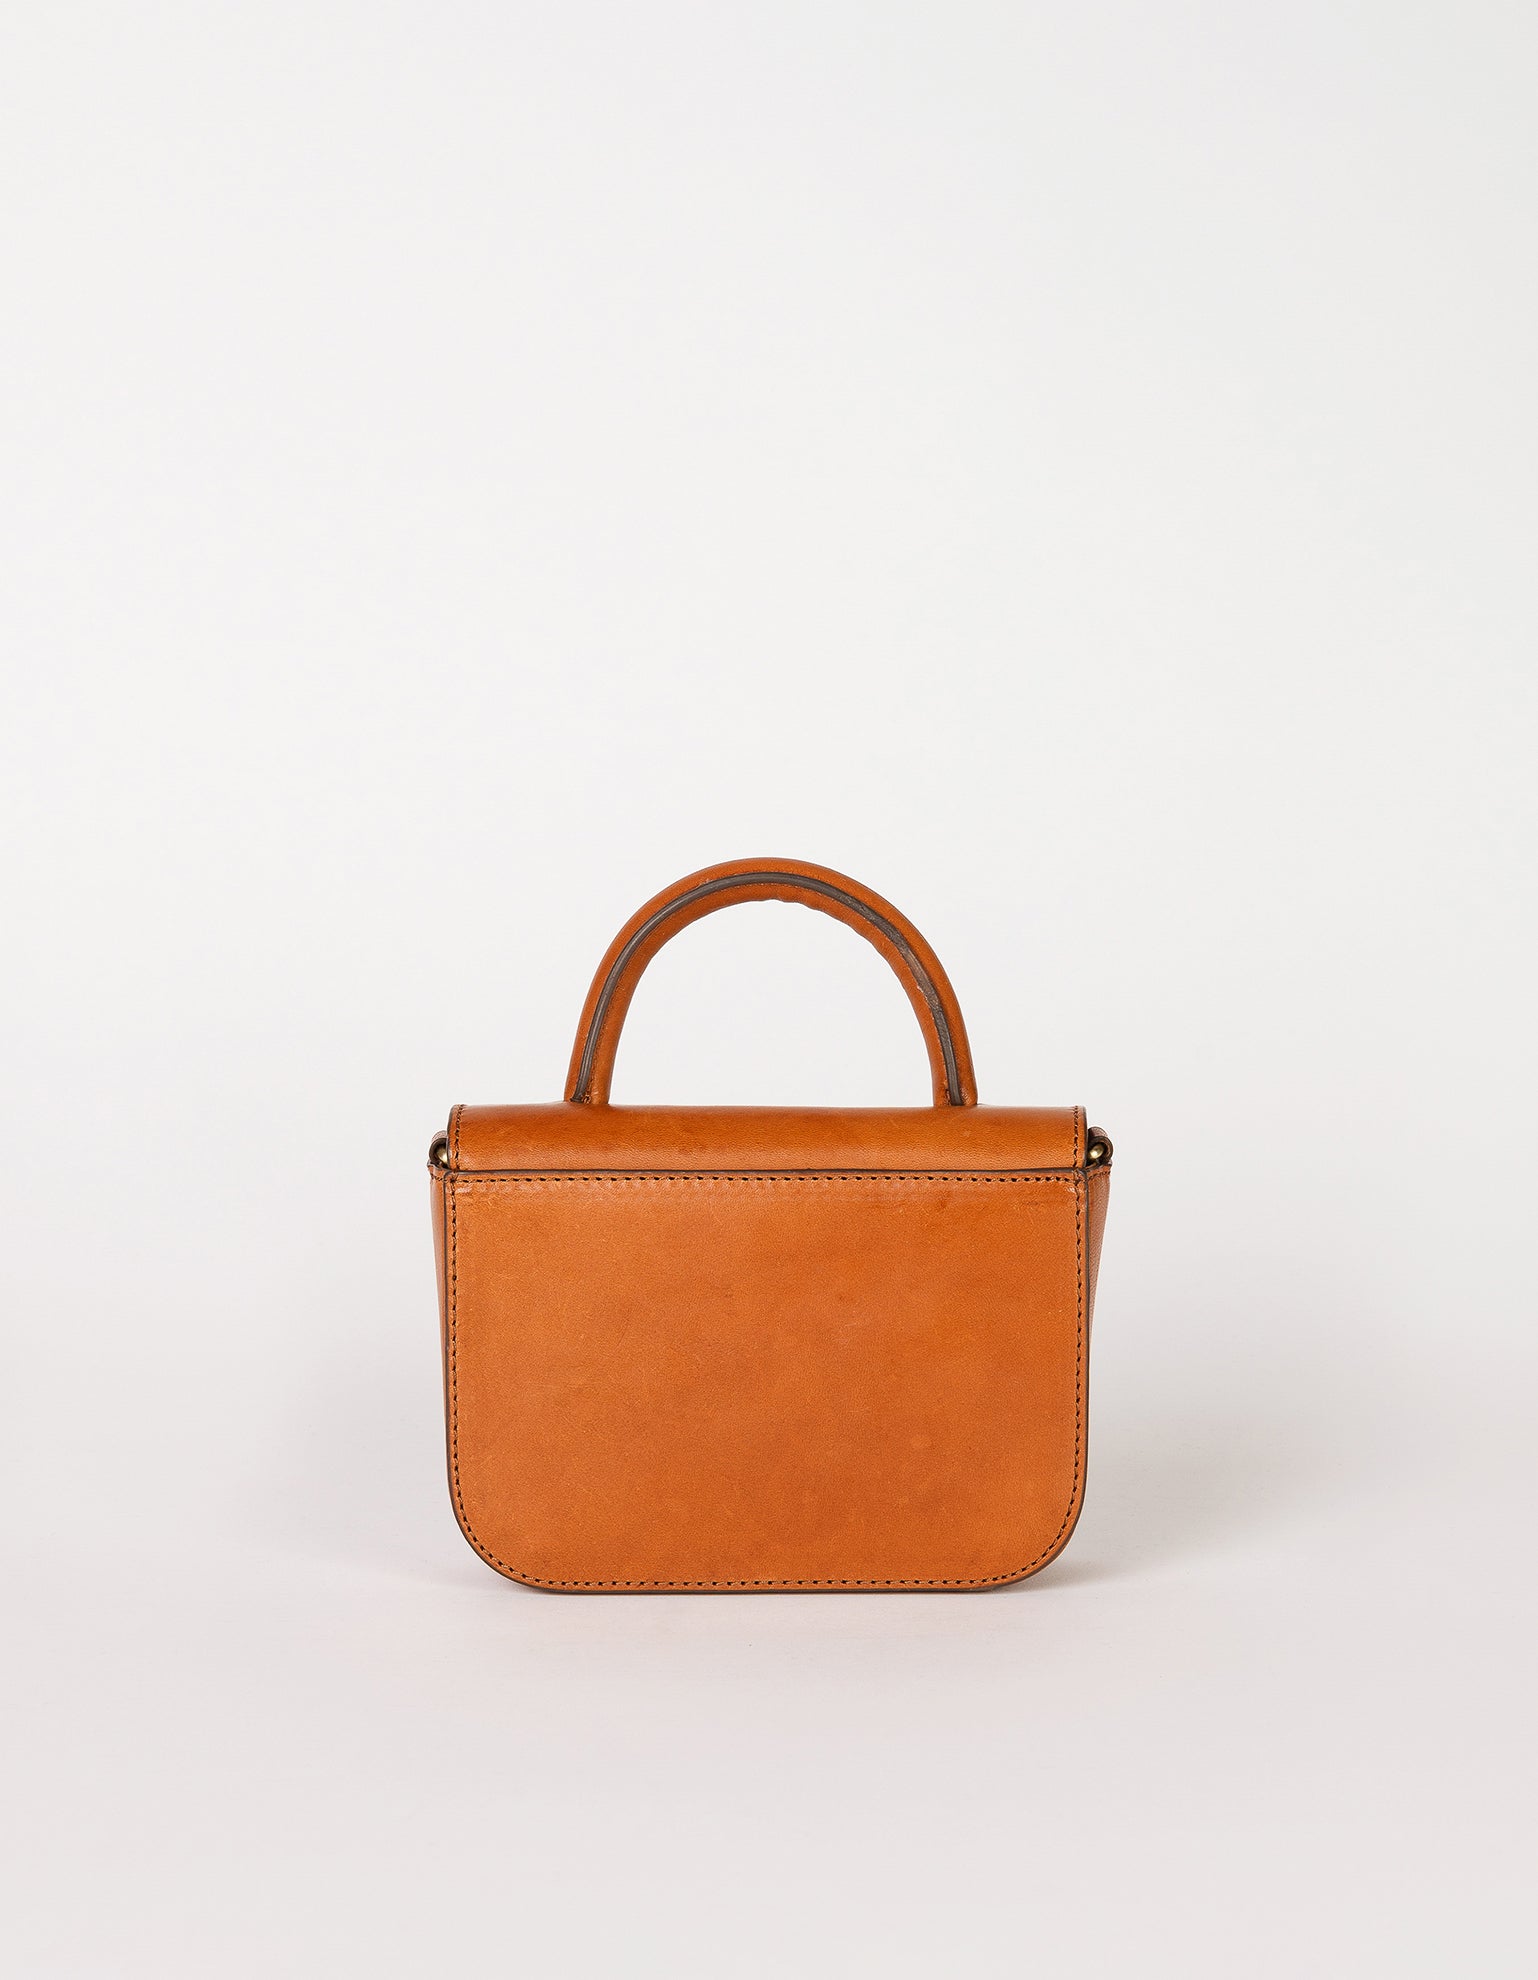 Nano Bag Cognac Classic Leather. Small clutch handbag, party bag. Back product image.